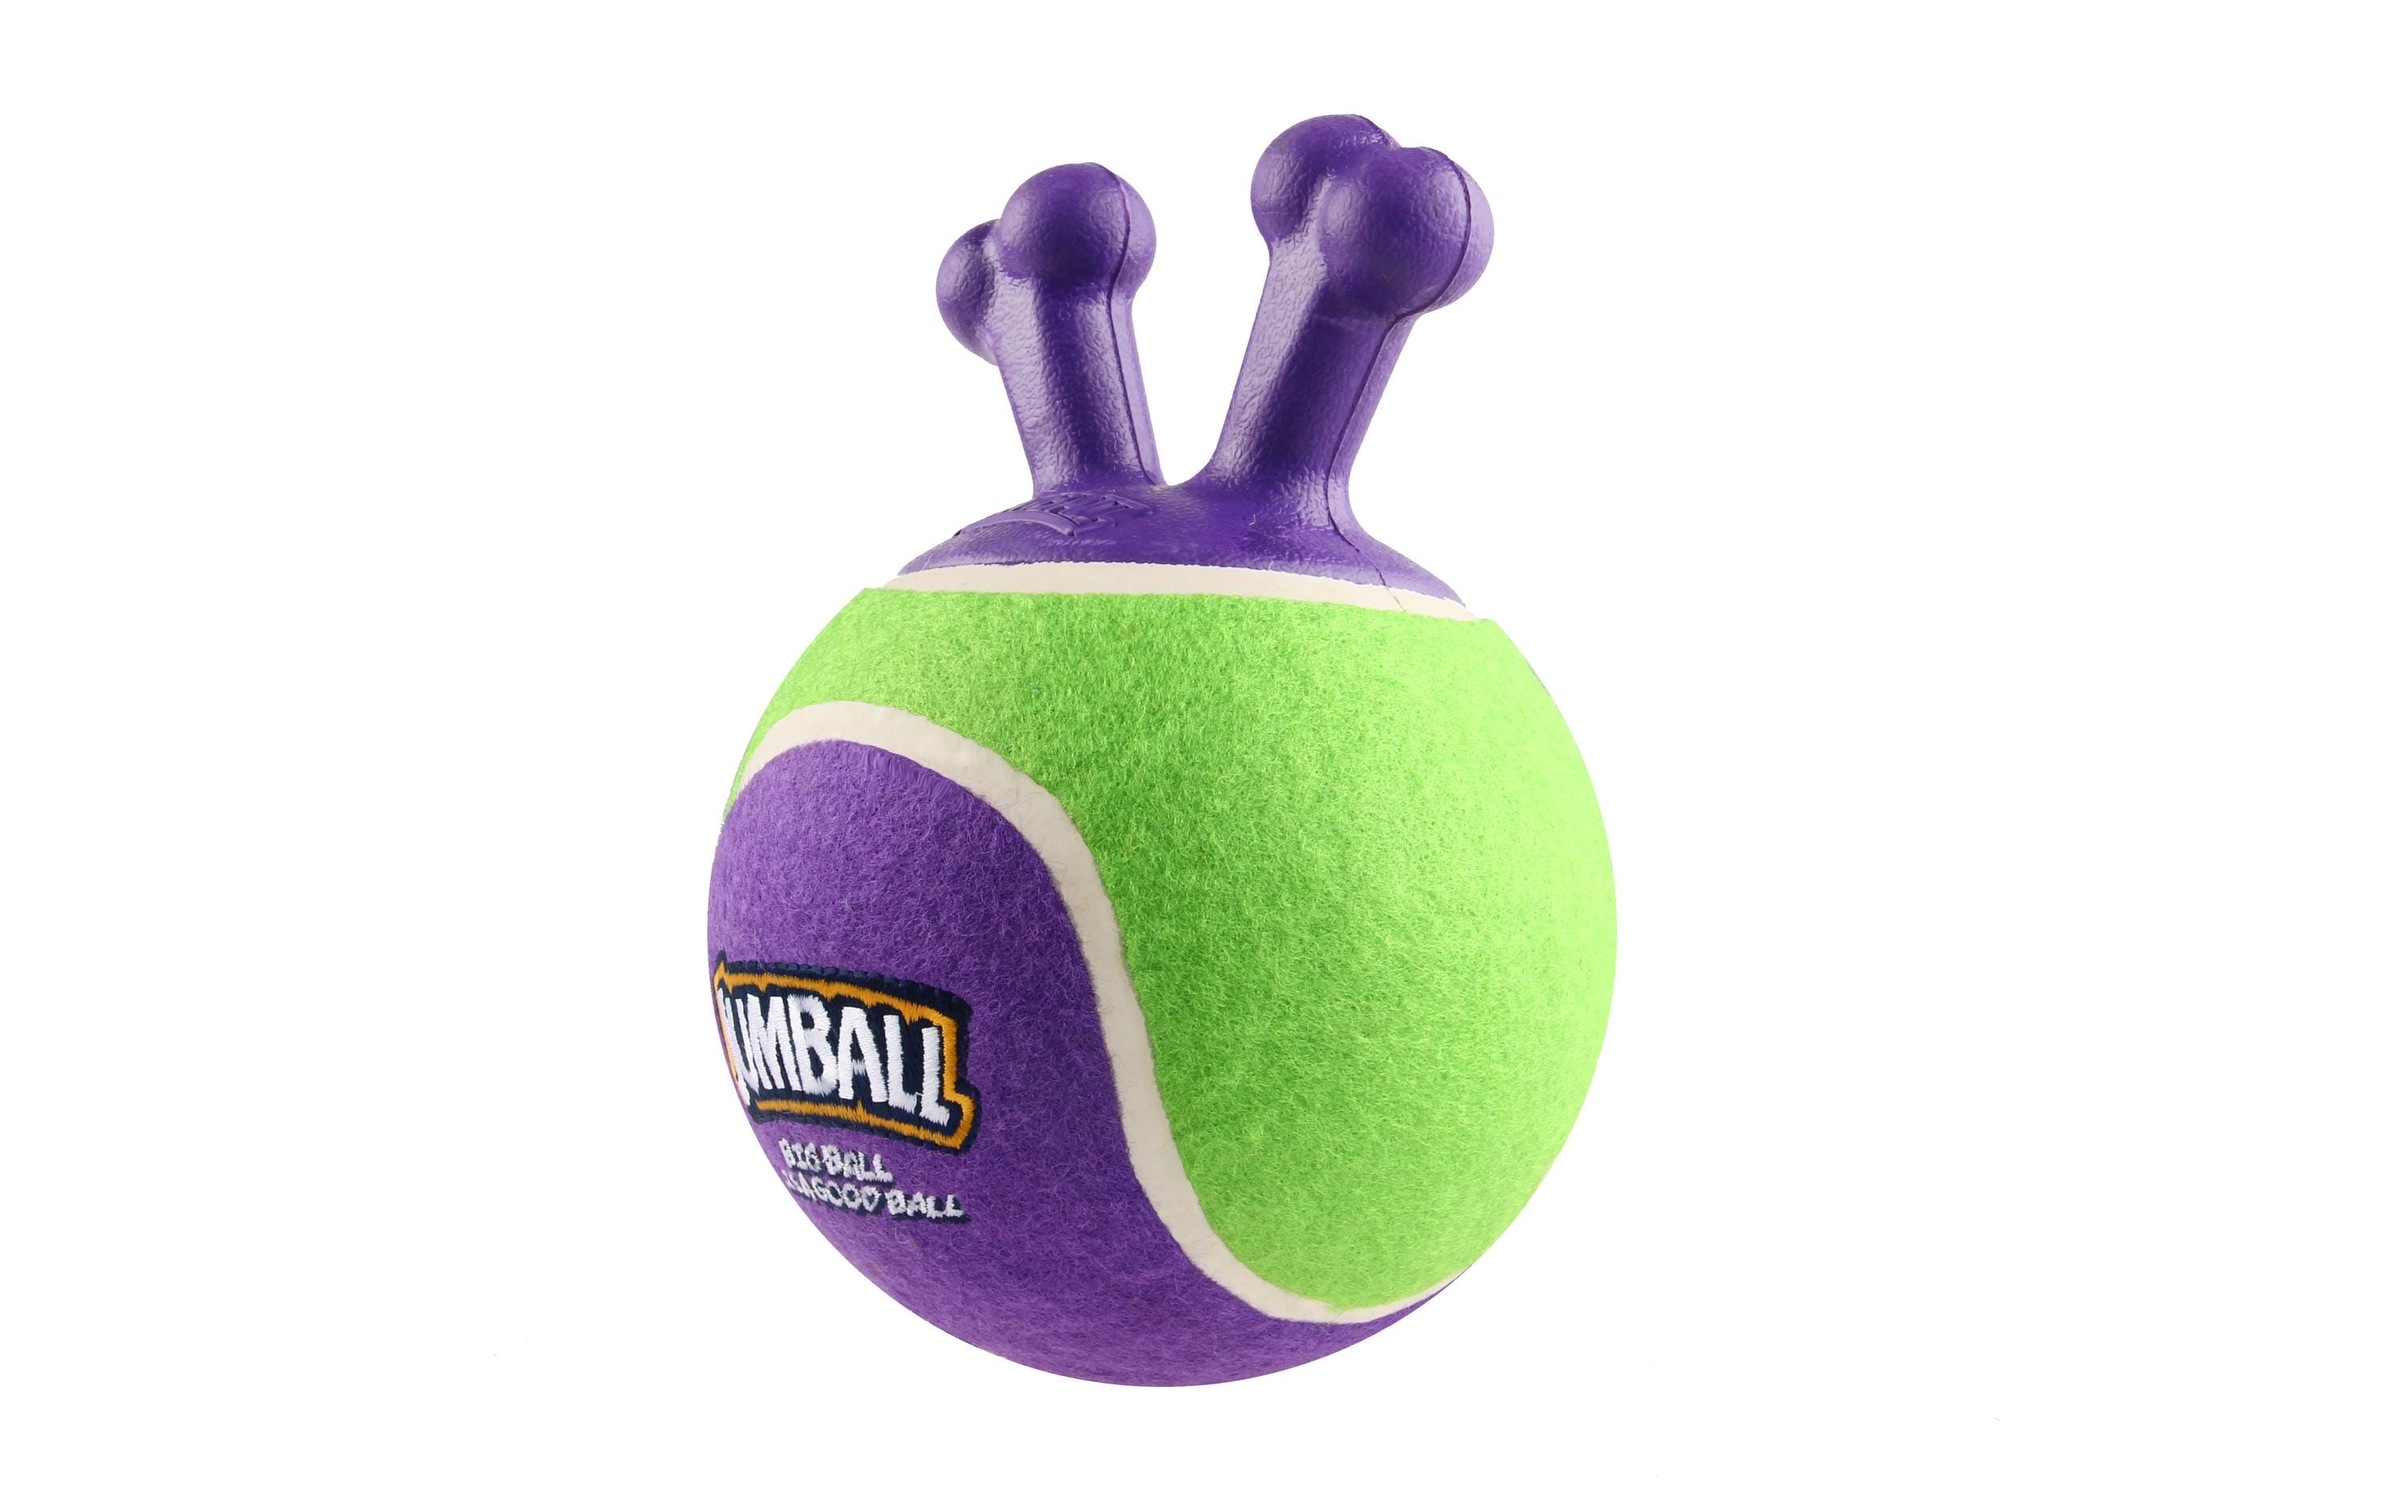 Tier-Beschäftigungsspielzeug »Jumpball, Tennis Ball, Grün/Violett«, Kunststoff